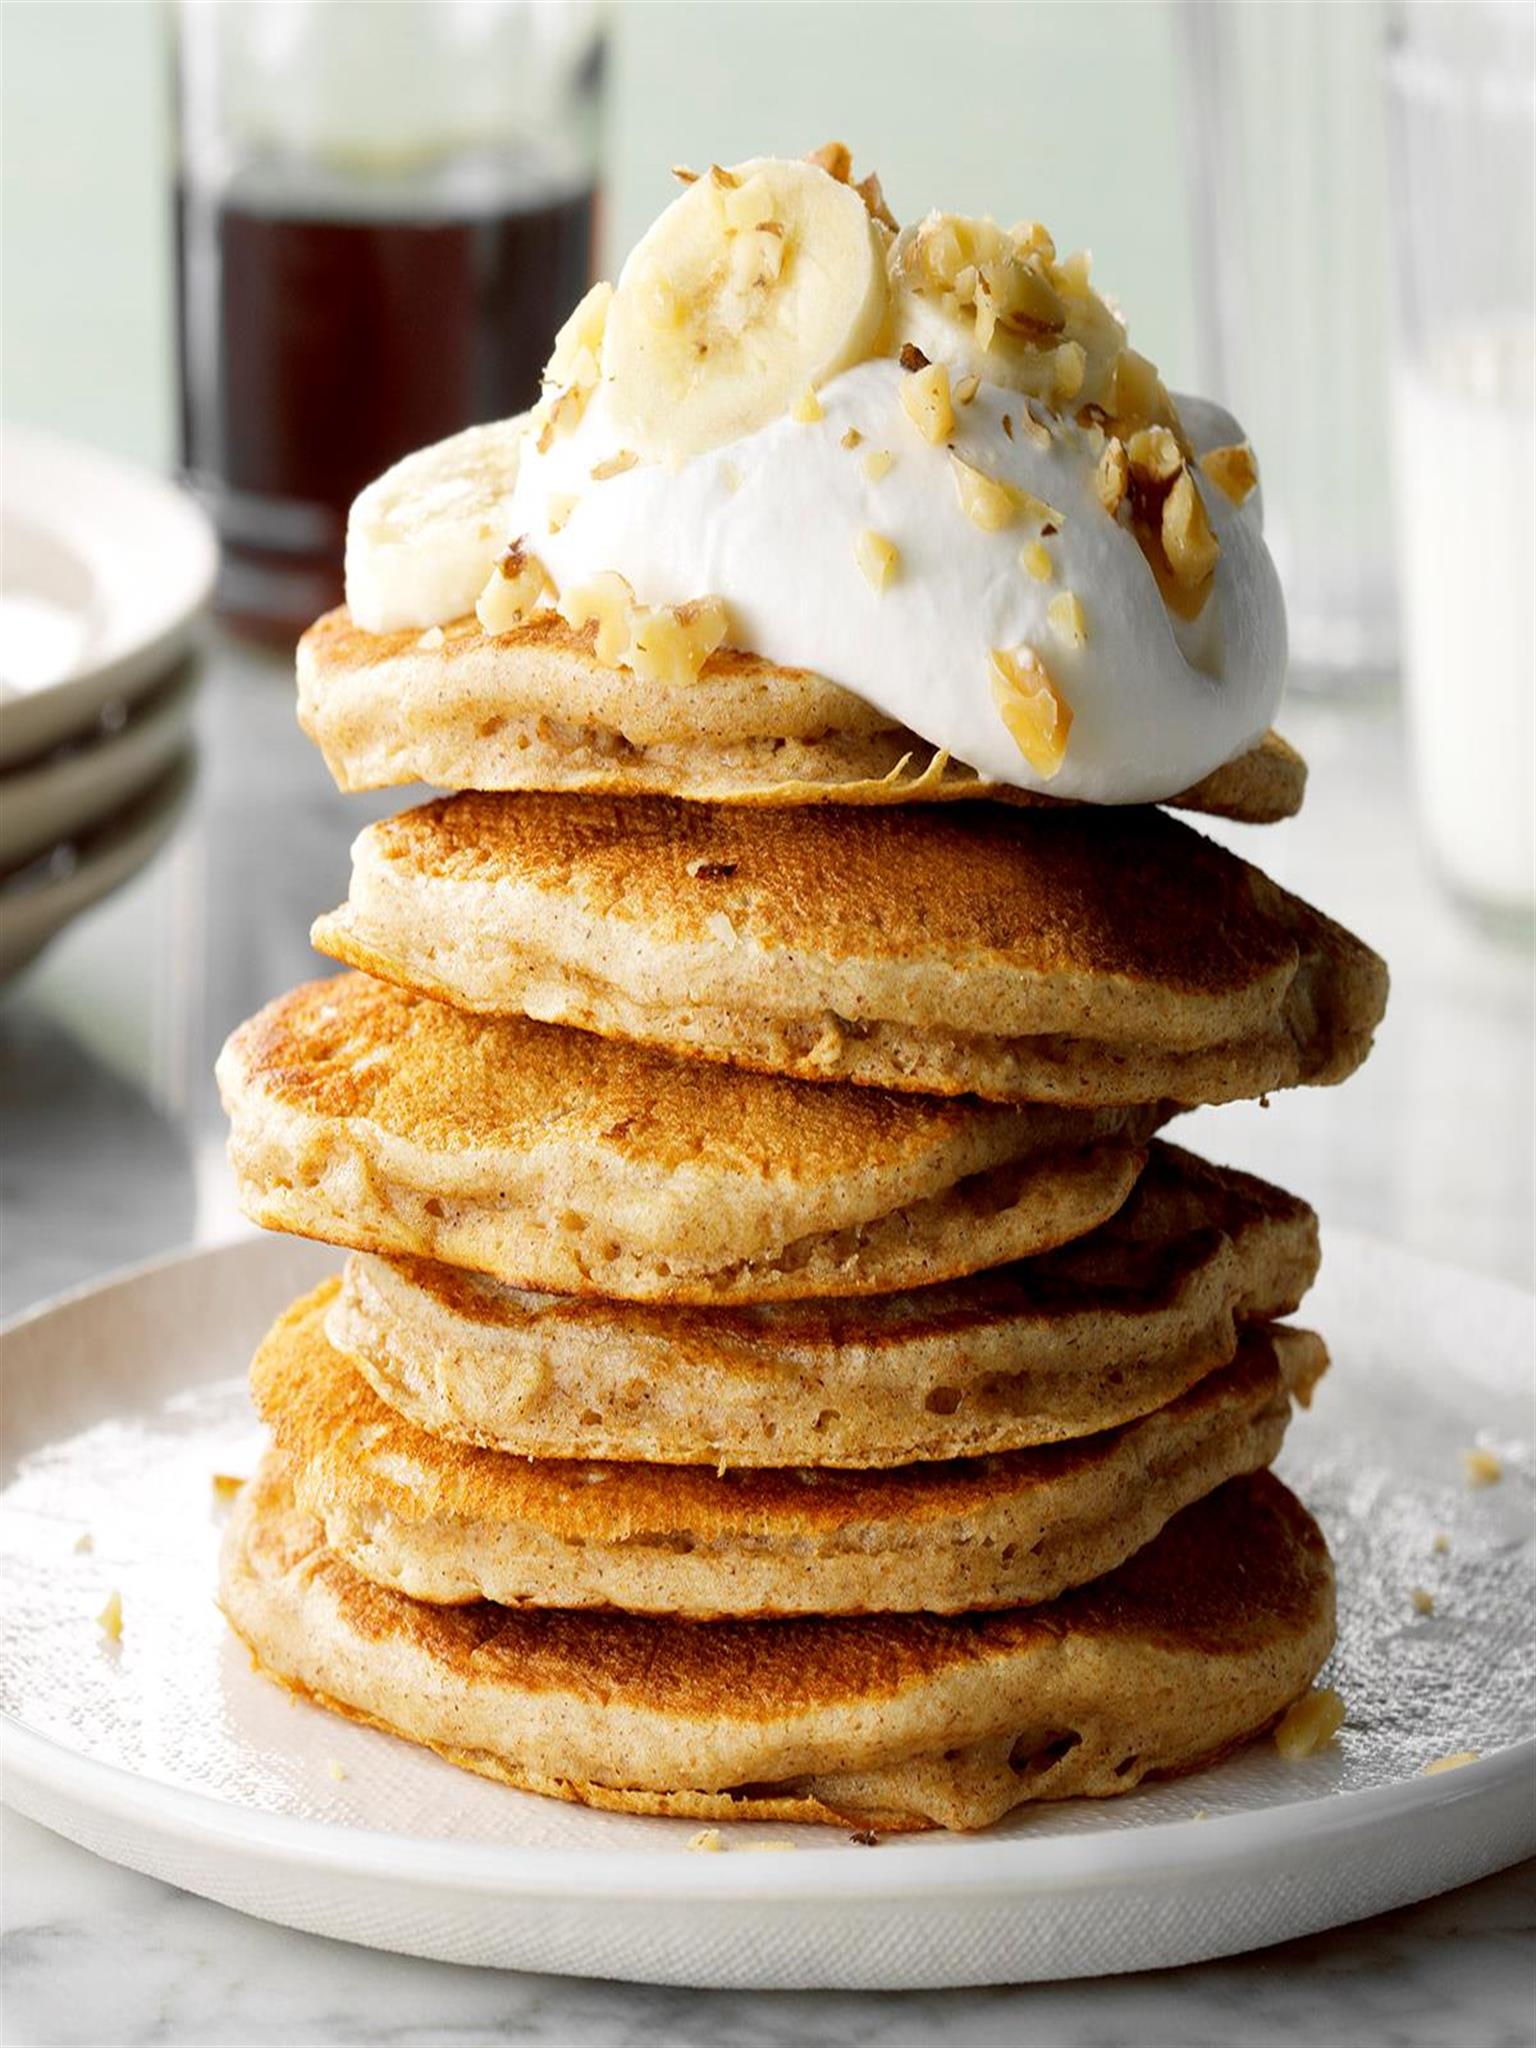 Fluffy Banana Pancakes Recipe: How to Make It